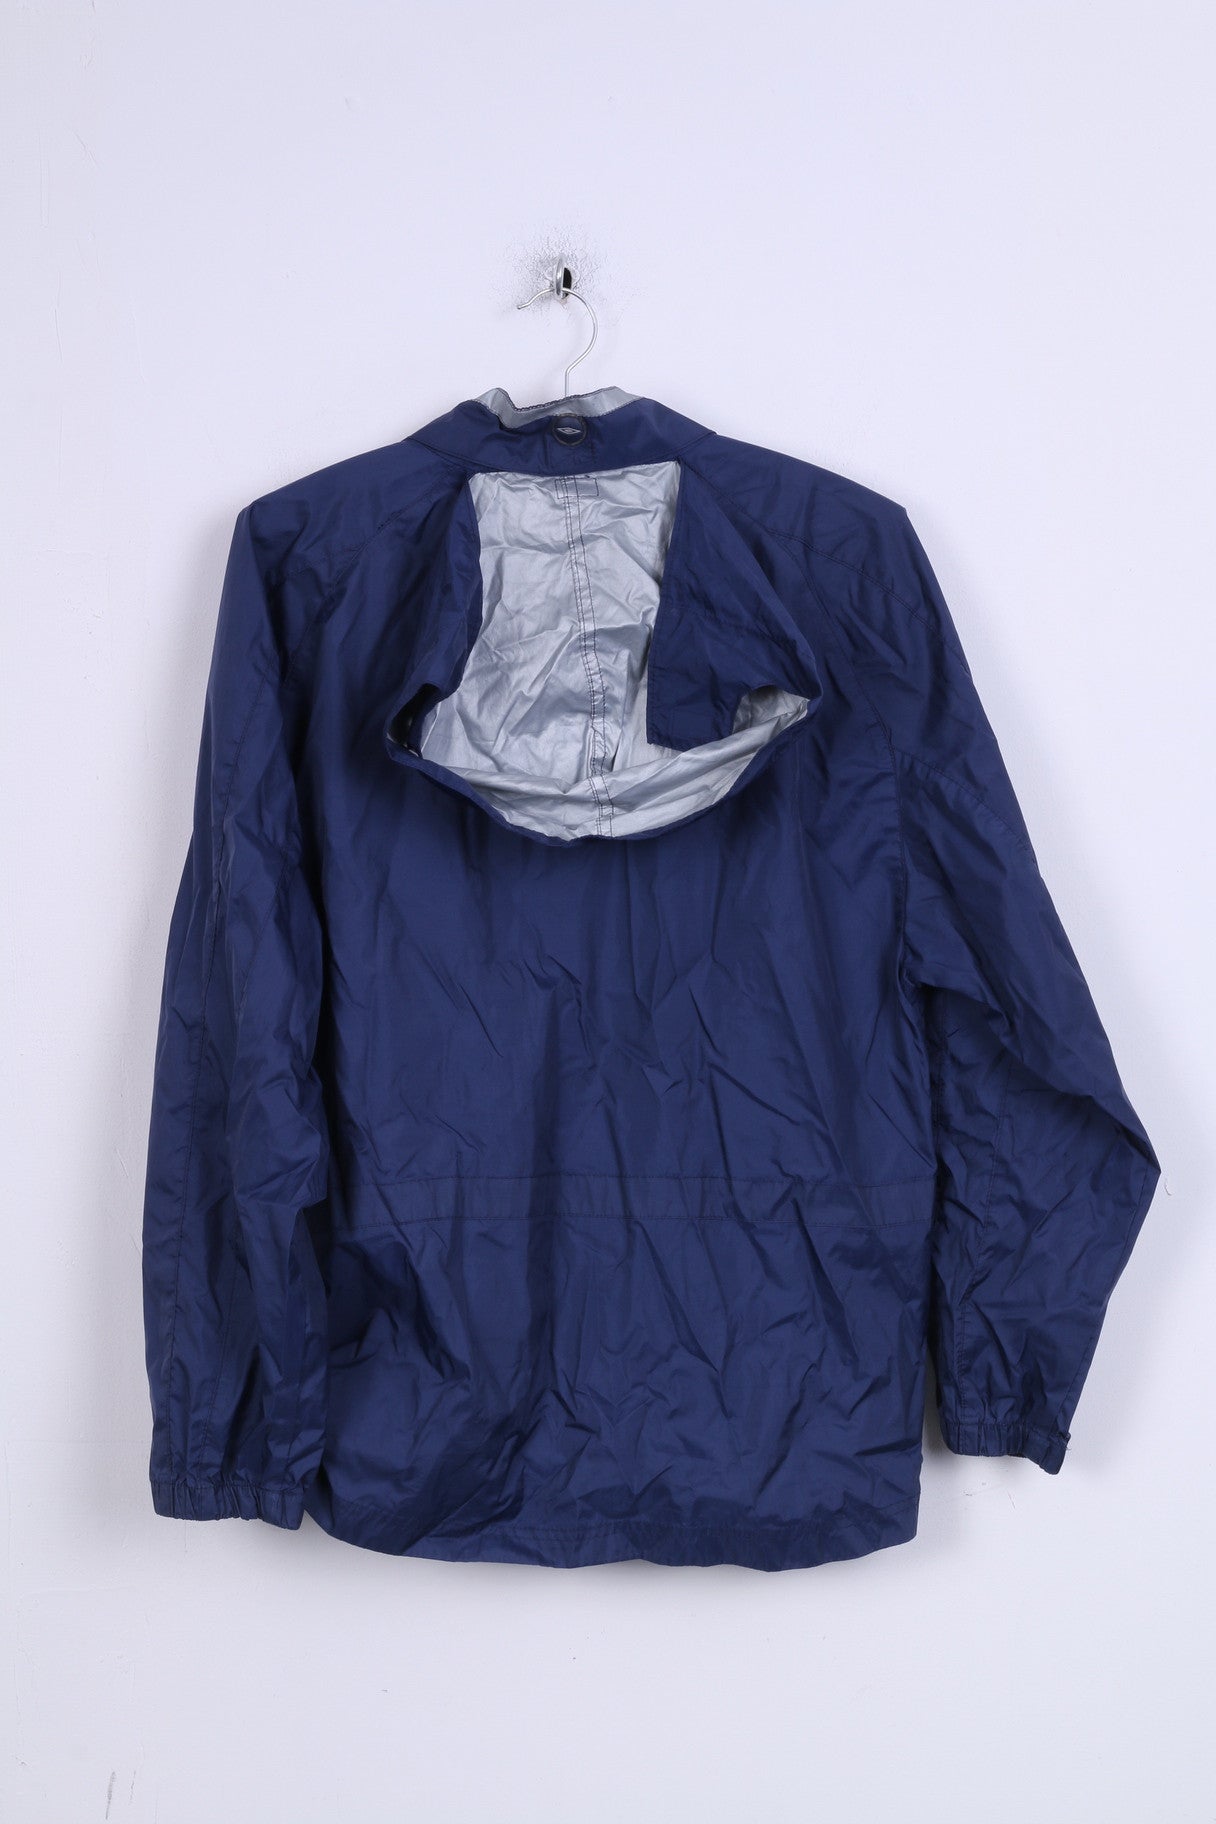 Giacca Umbro Boys YXL 158 Abbigliamento sportivo blu Nylon impermeabile con cerniera